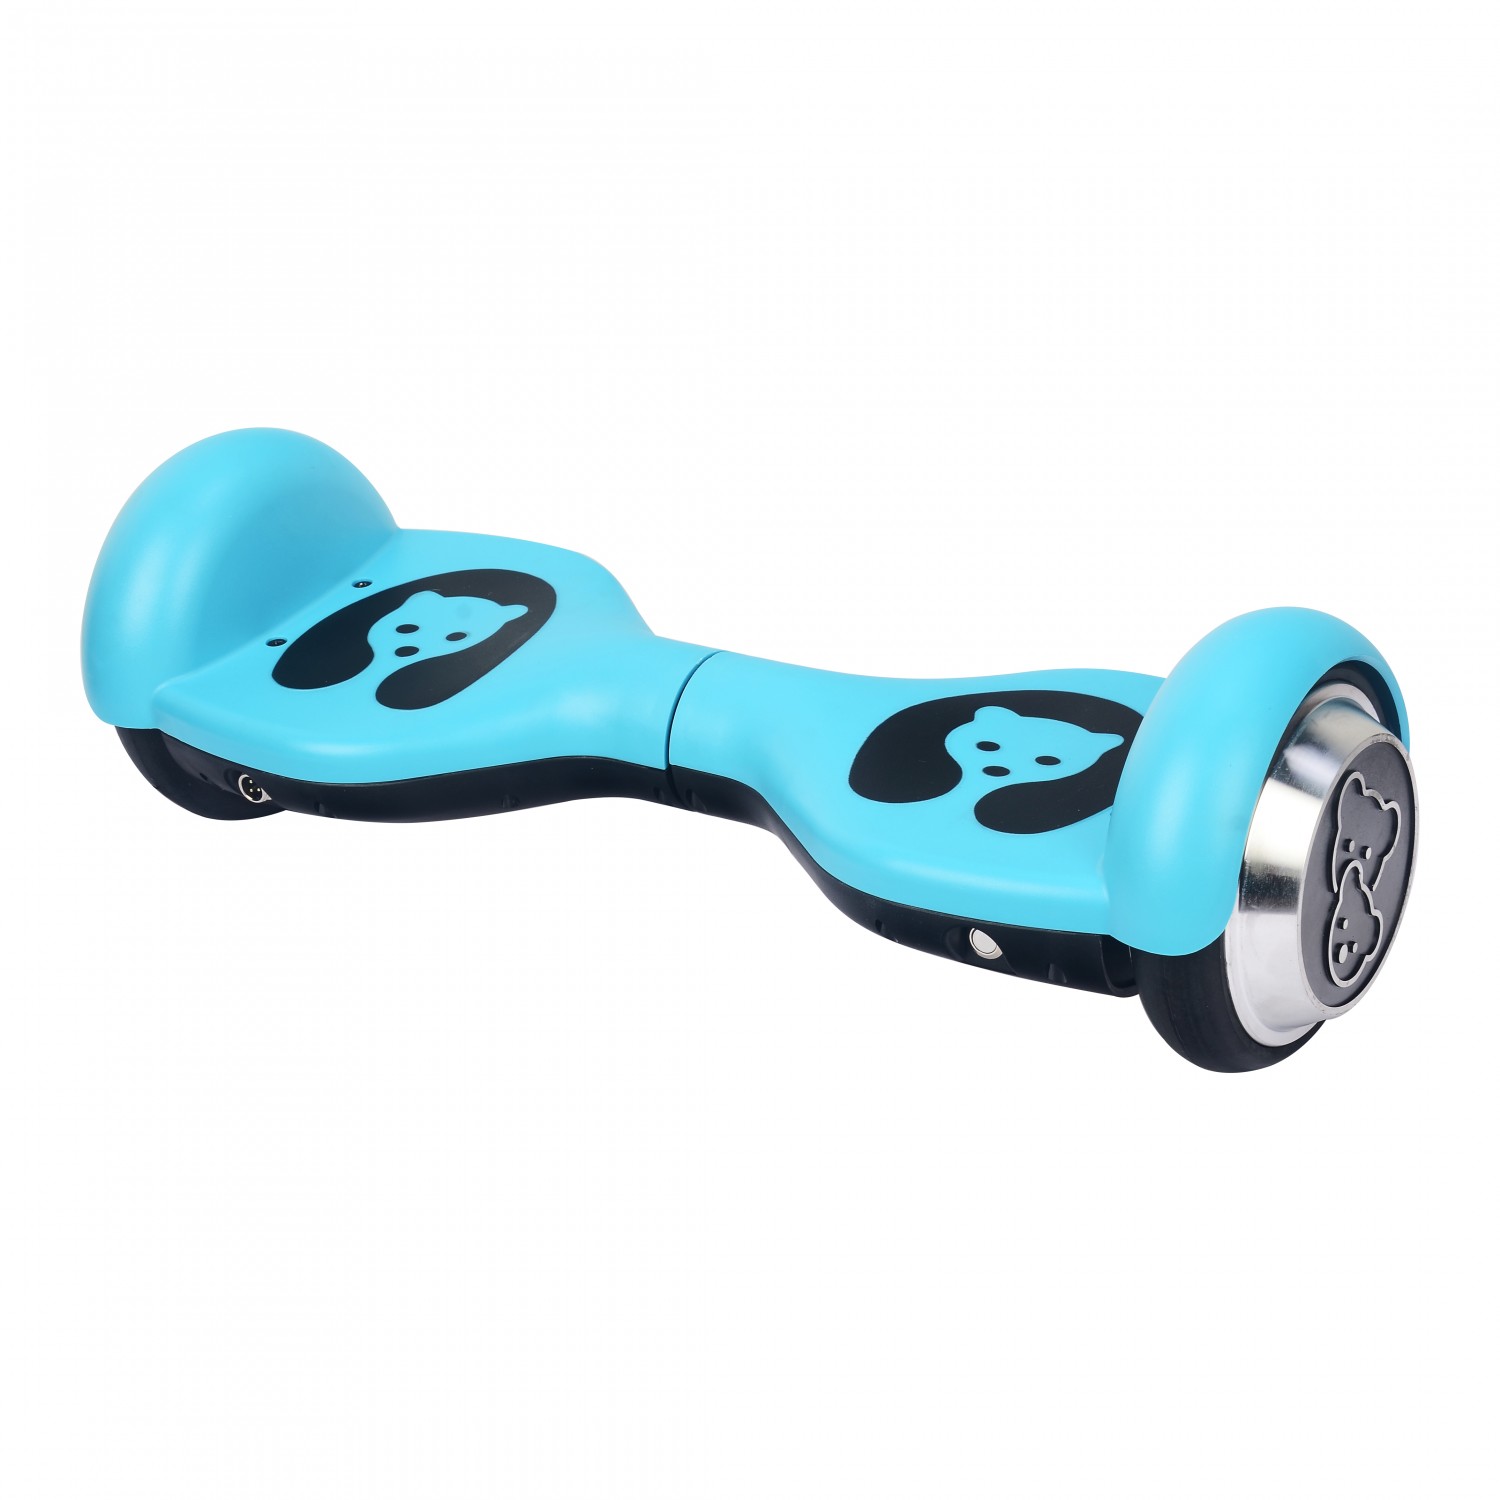  Hoverboard für Kinder blau